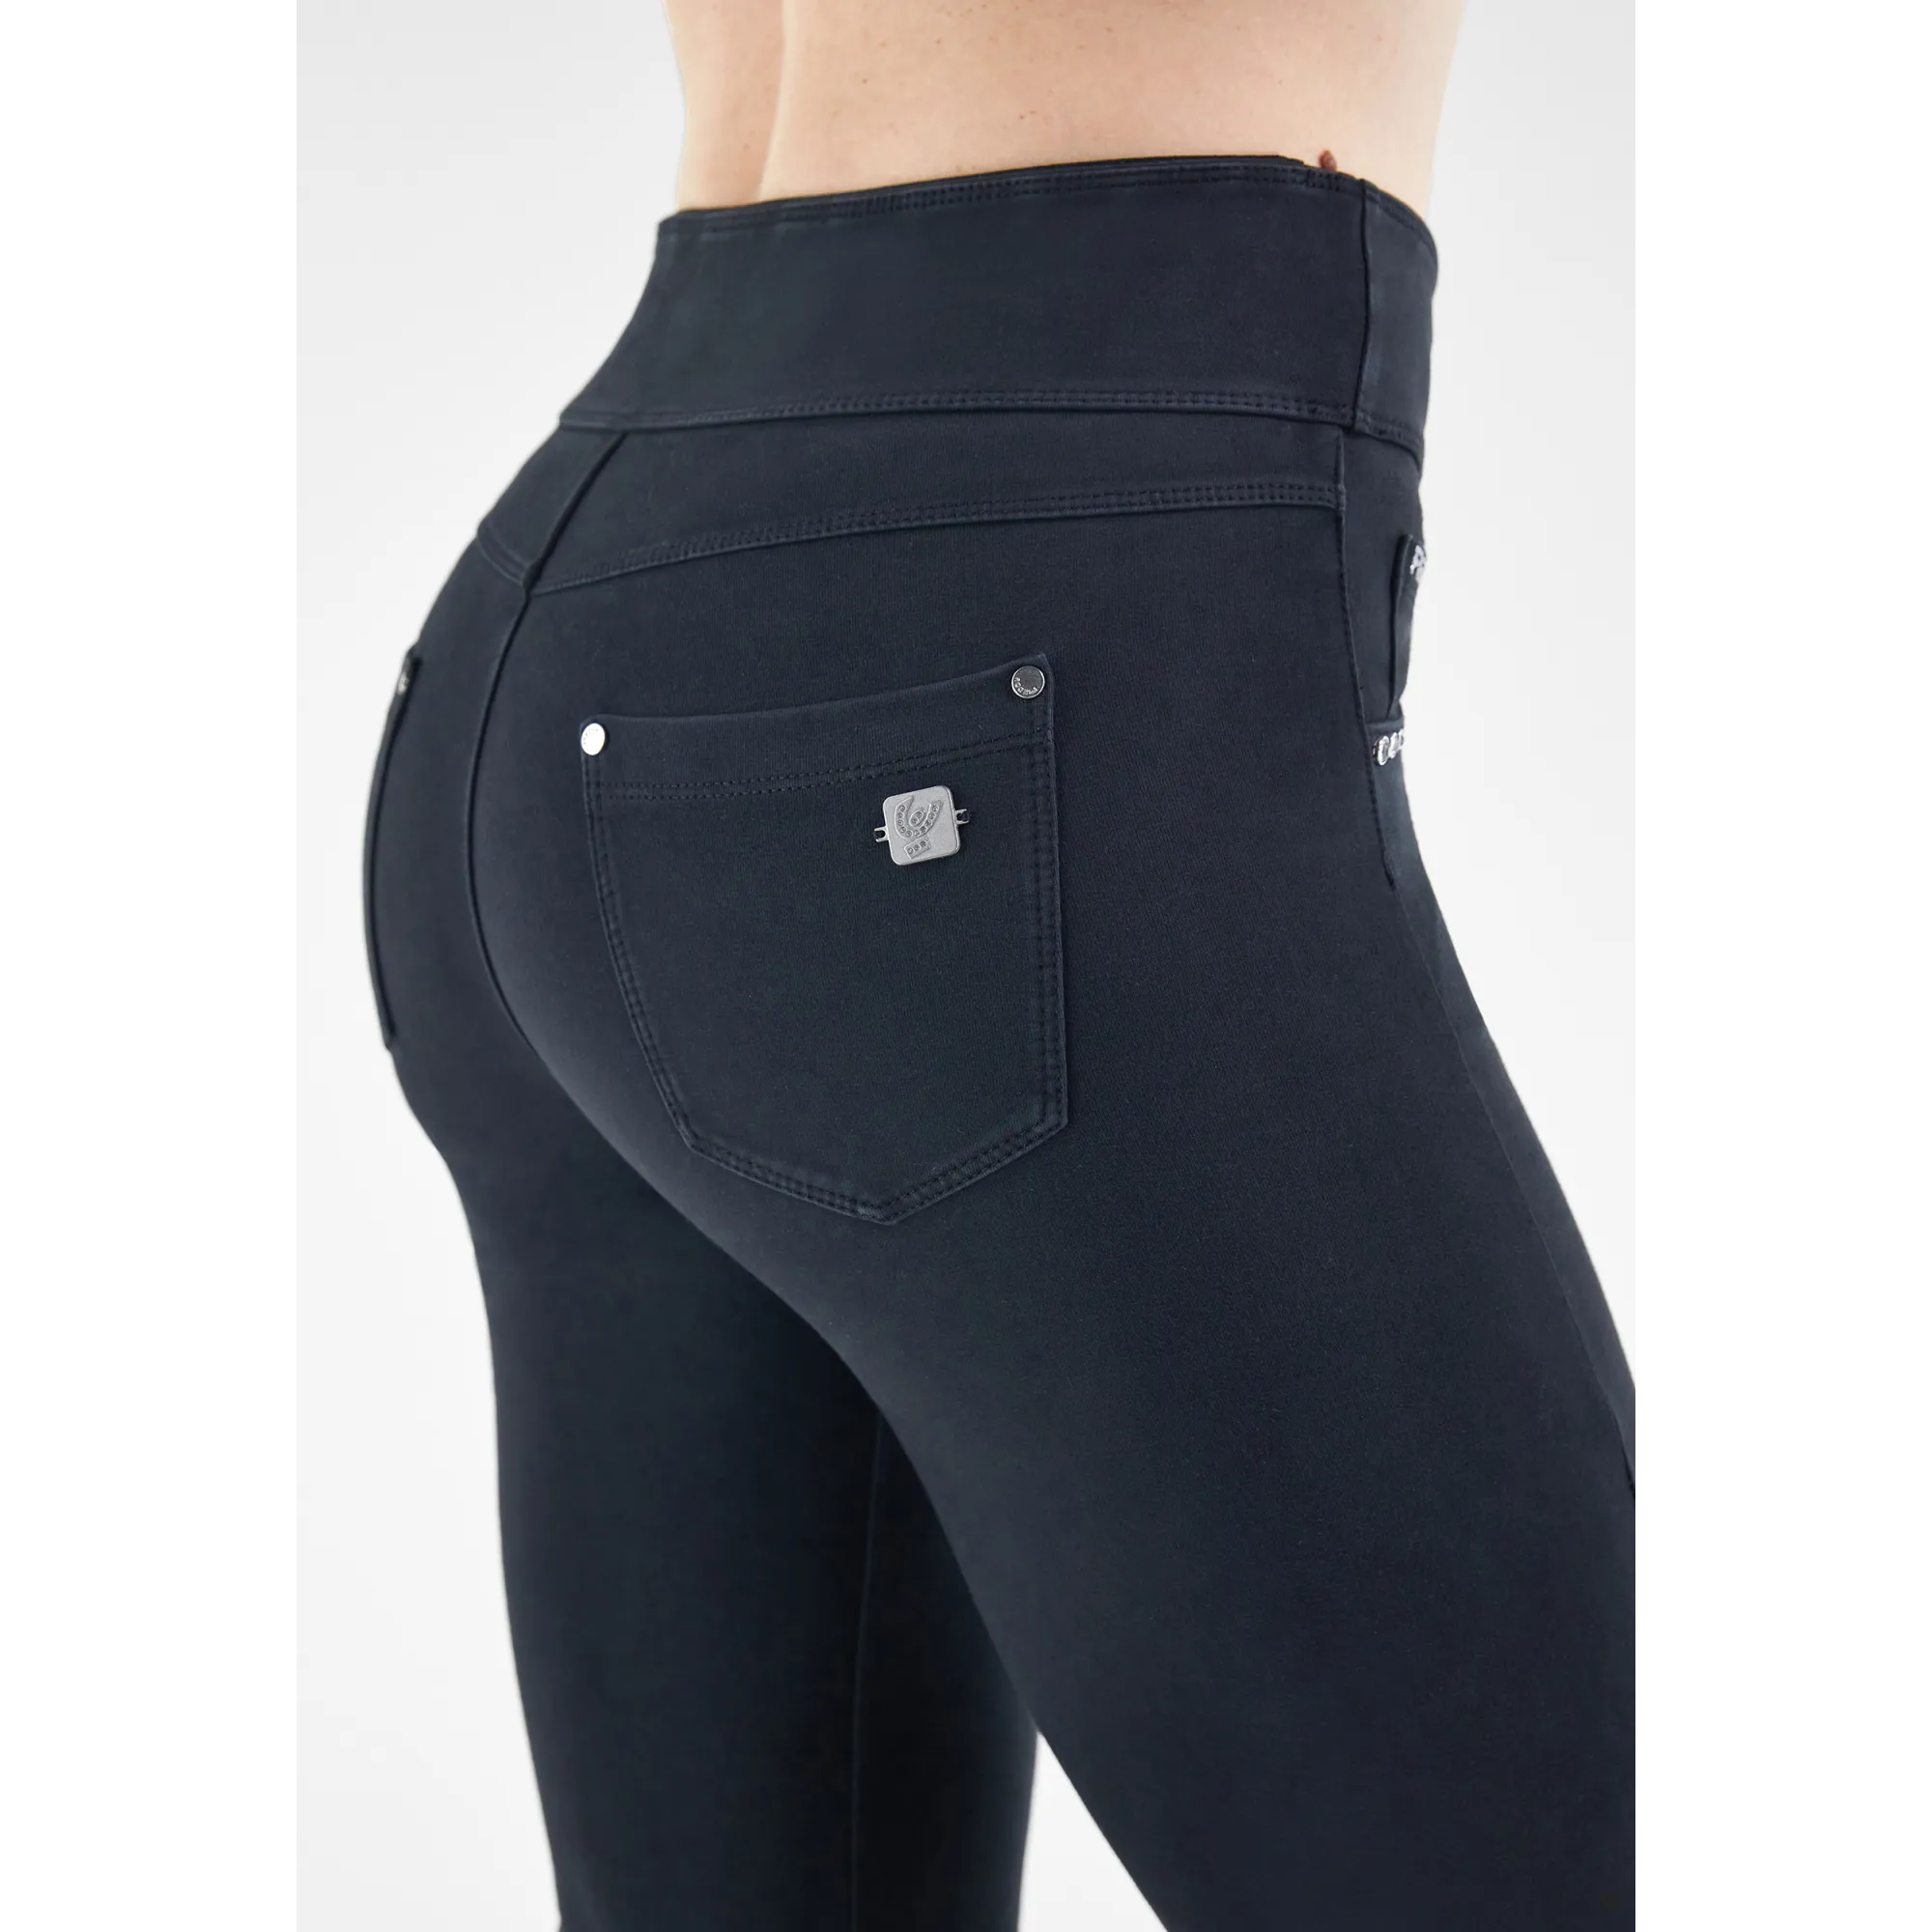 Freddy N.O.W.® Yoga Damen Comfort Hose - Mid Waist Straight - umschlagbarer Taillenbund - Garment Dyed - Schwarz - N0